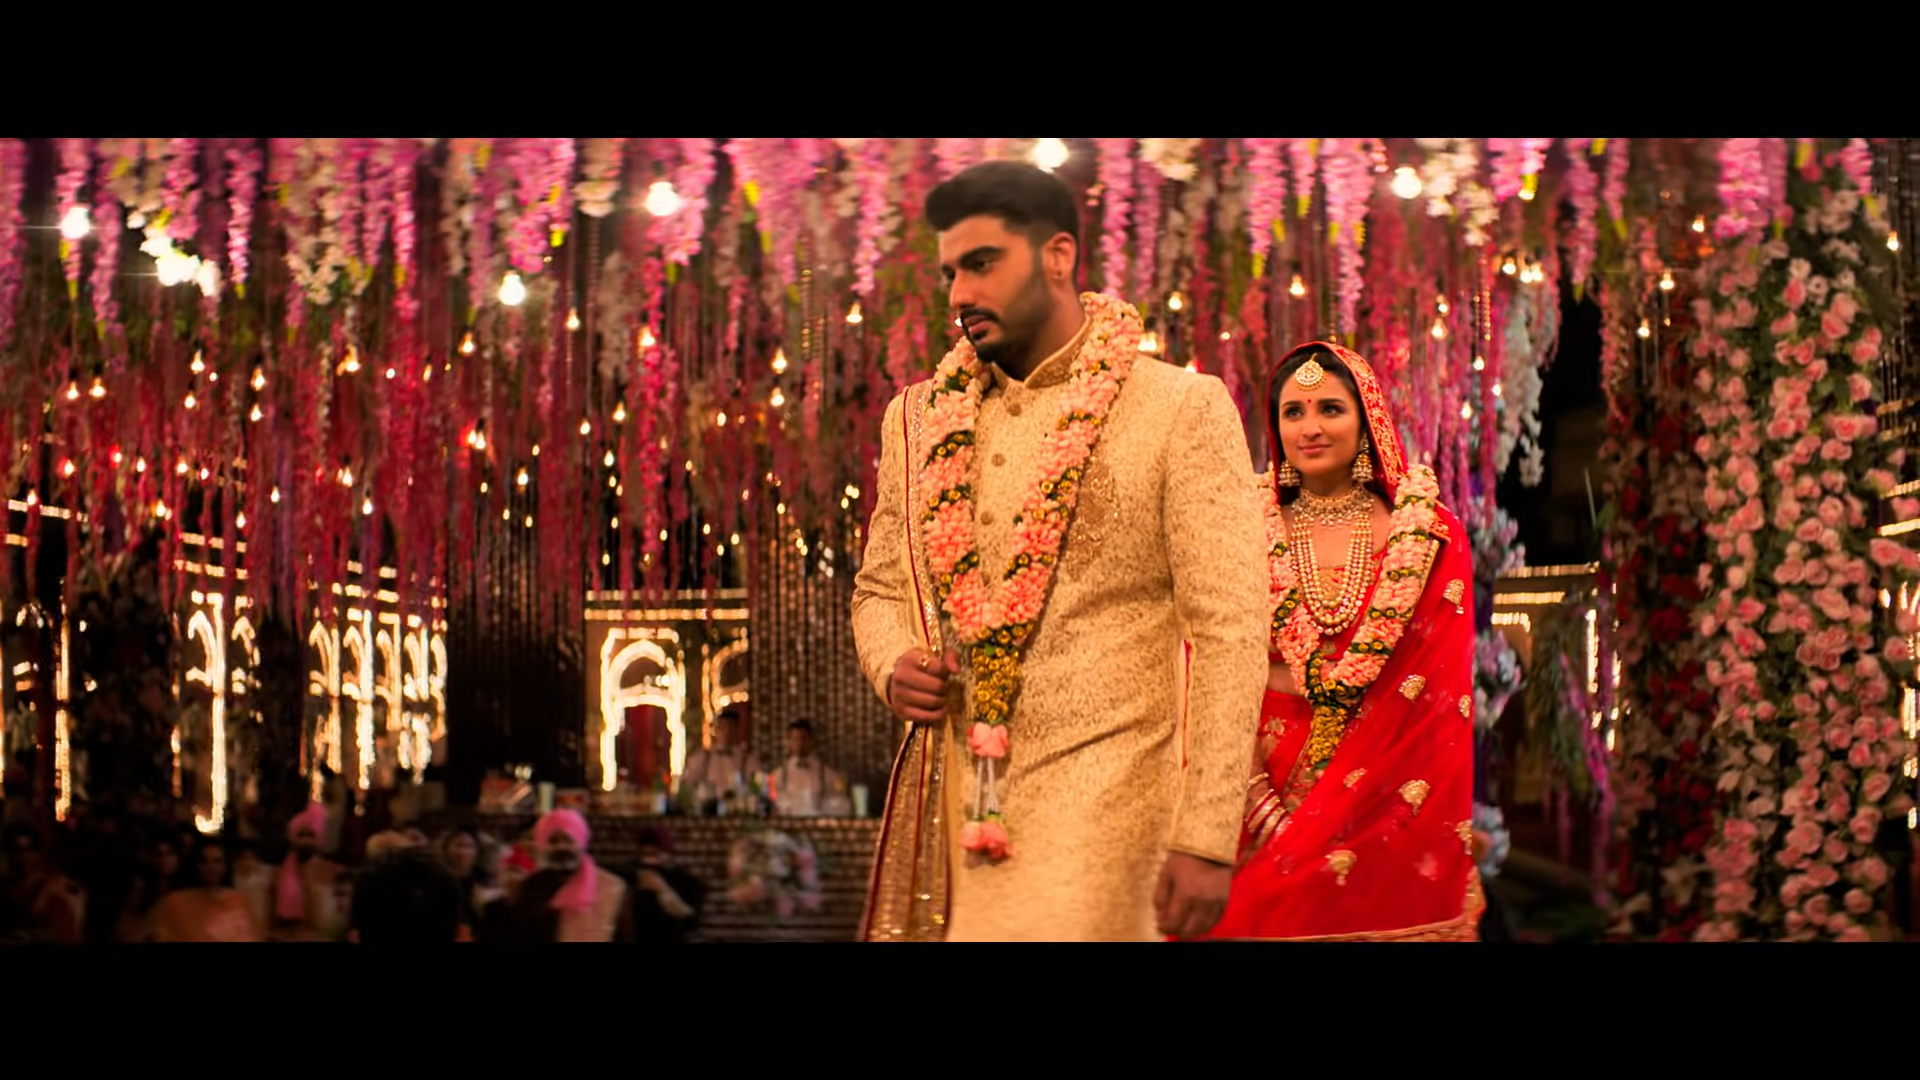 Arjun Kapoor and Parineeti Chopra dressed in wedding attire performing the &#x27;7 phere&#x27; ritual